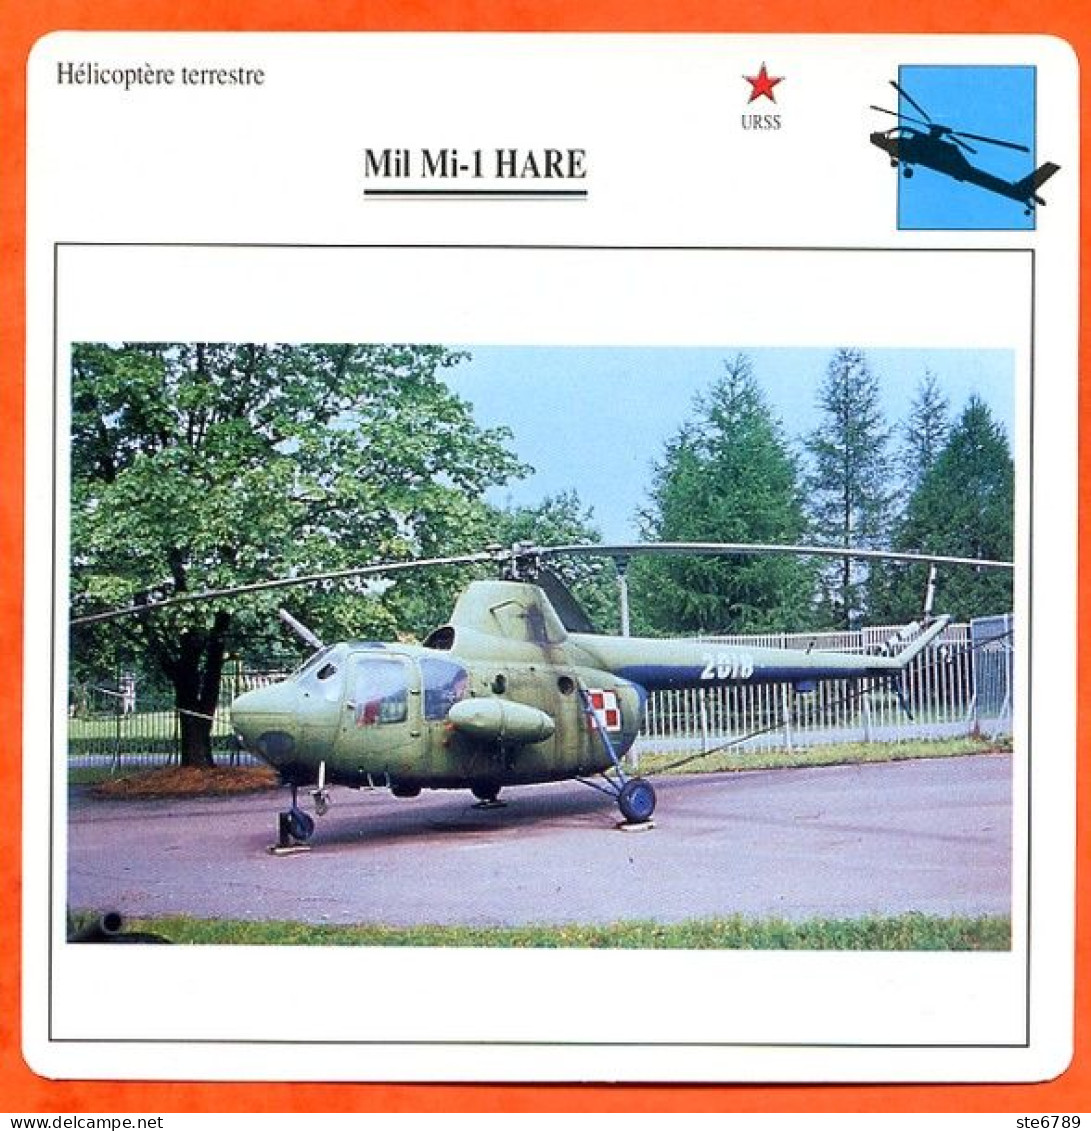 Fiche Aviation Mil Mi 1 HARE / Hélicoptère Terrestre URSS Avions - Aerei